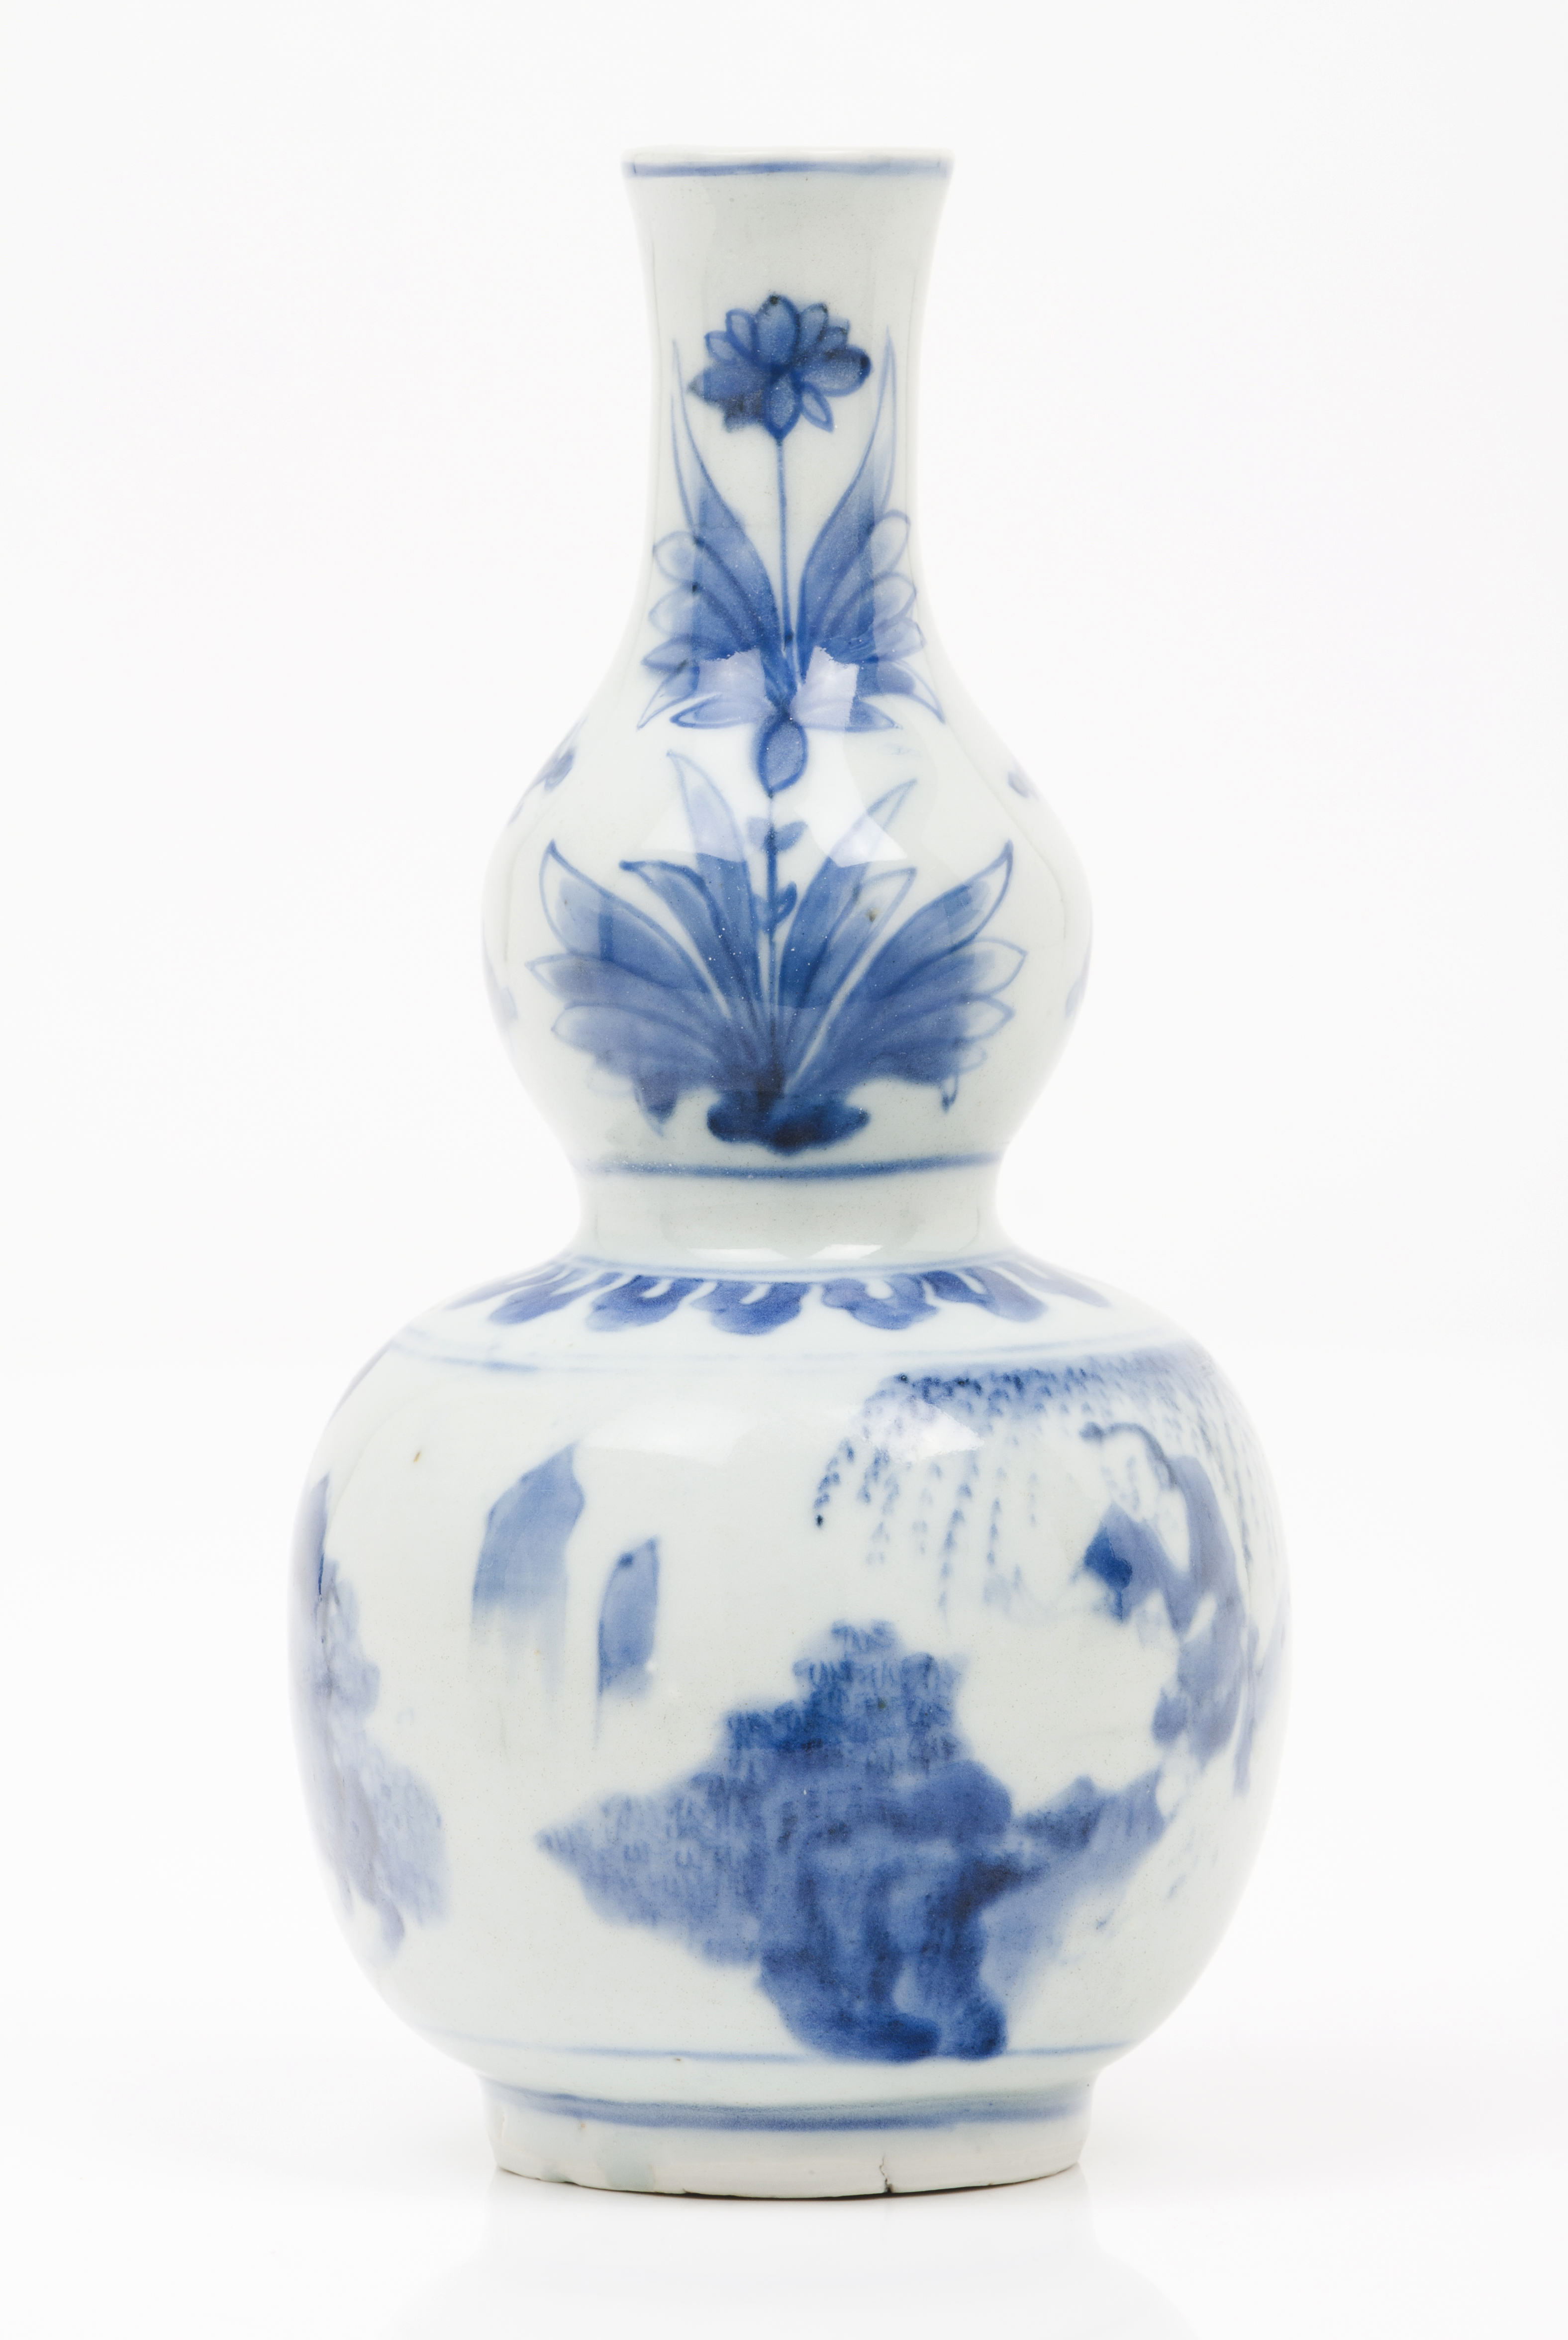 A gourdChinese porcelain Blue underglaze decoration of landscape with figures, foliage motifs and